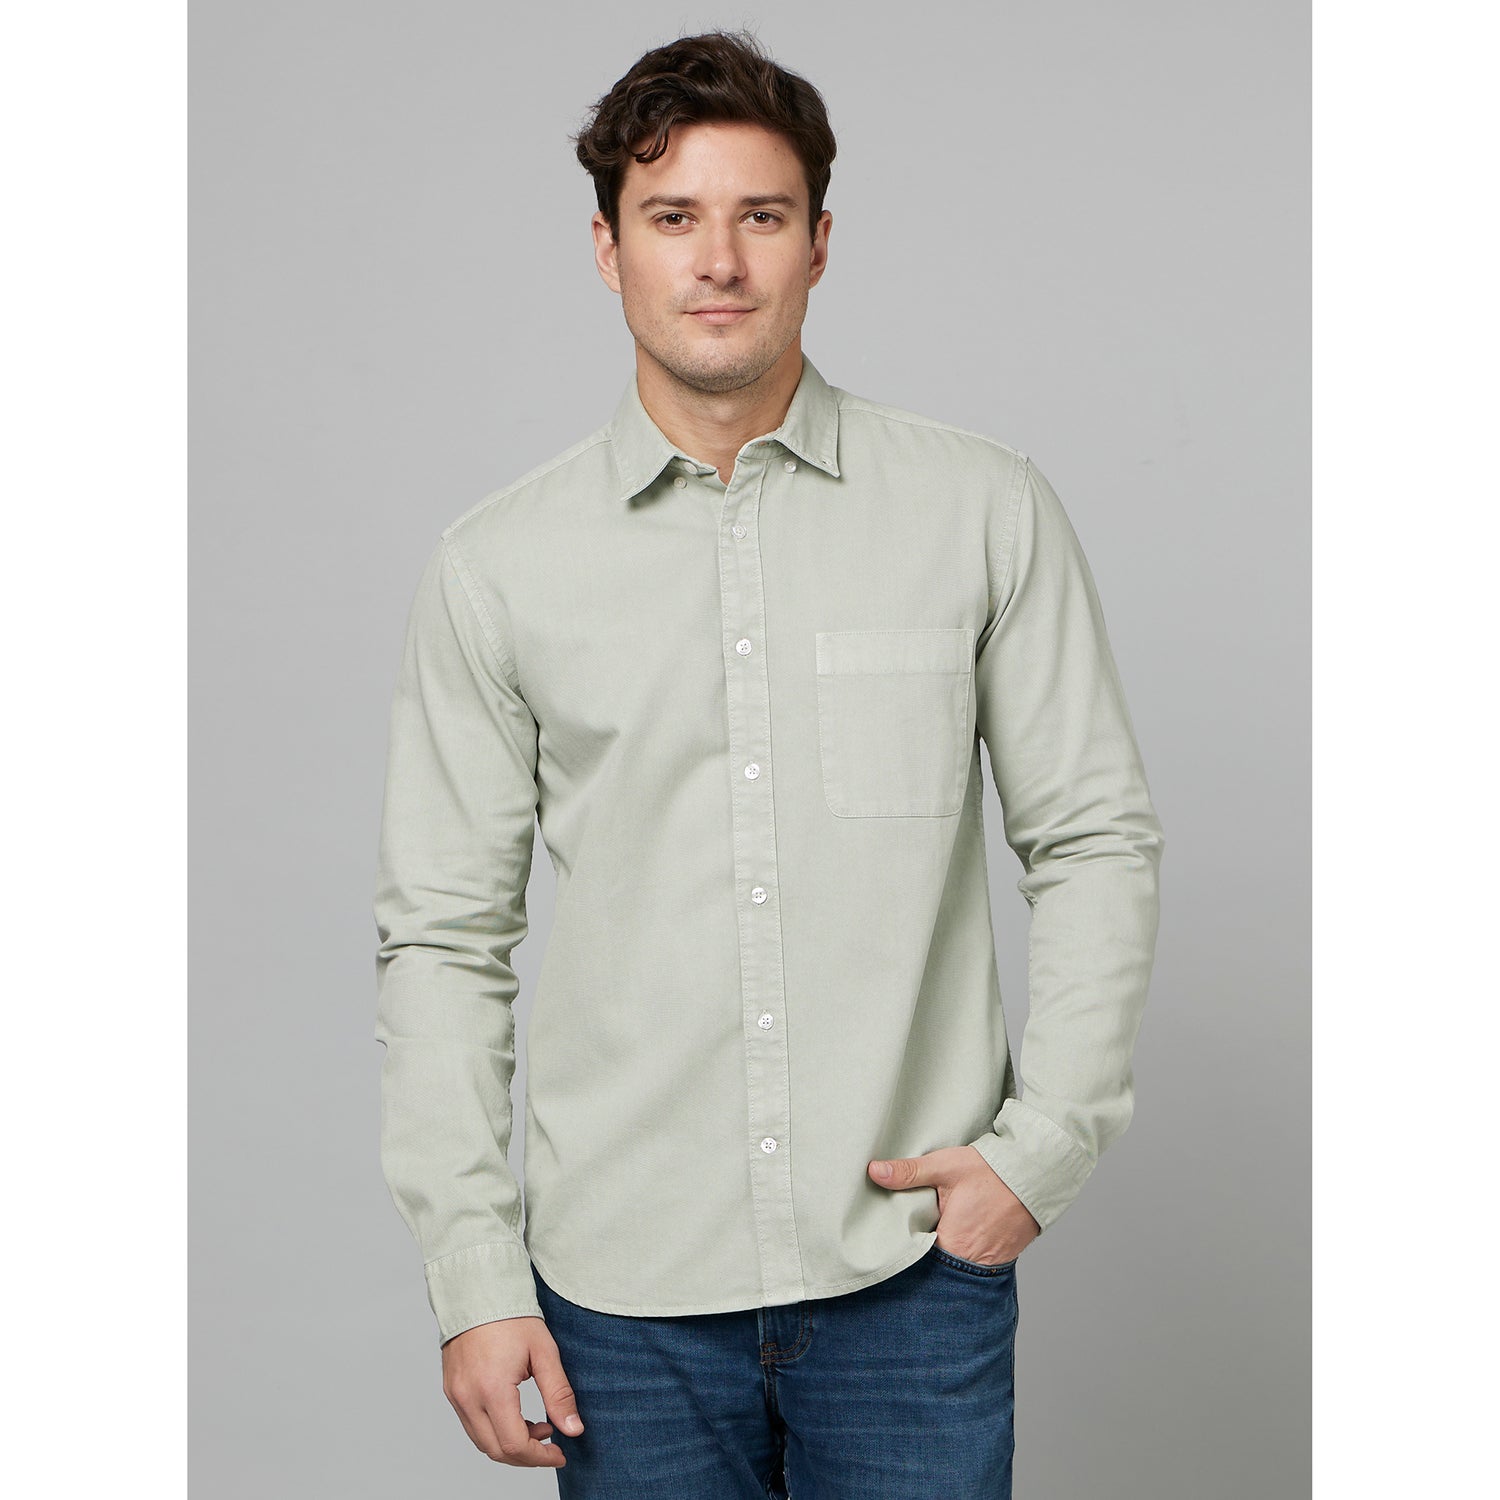 Grey Classic Cotton Casual Shirt (FAZAROD)